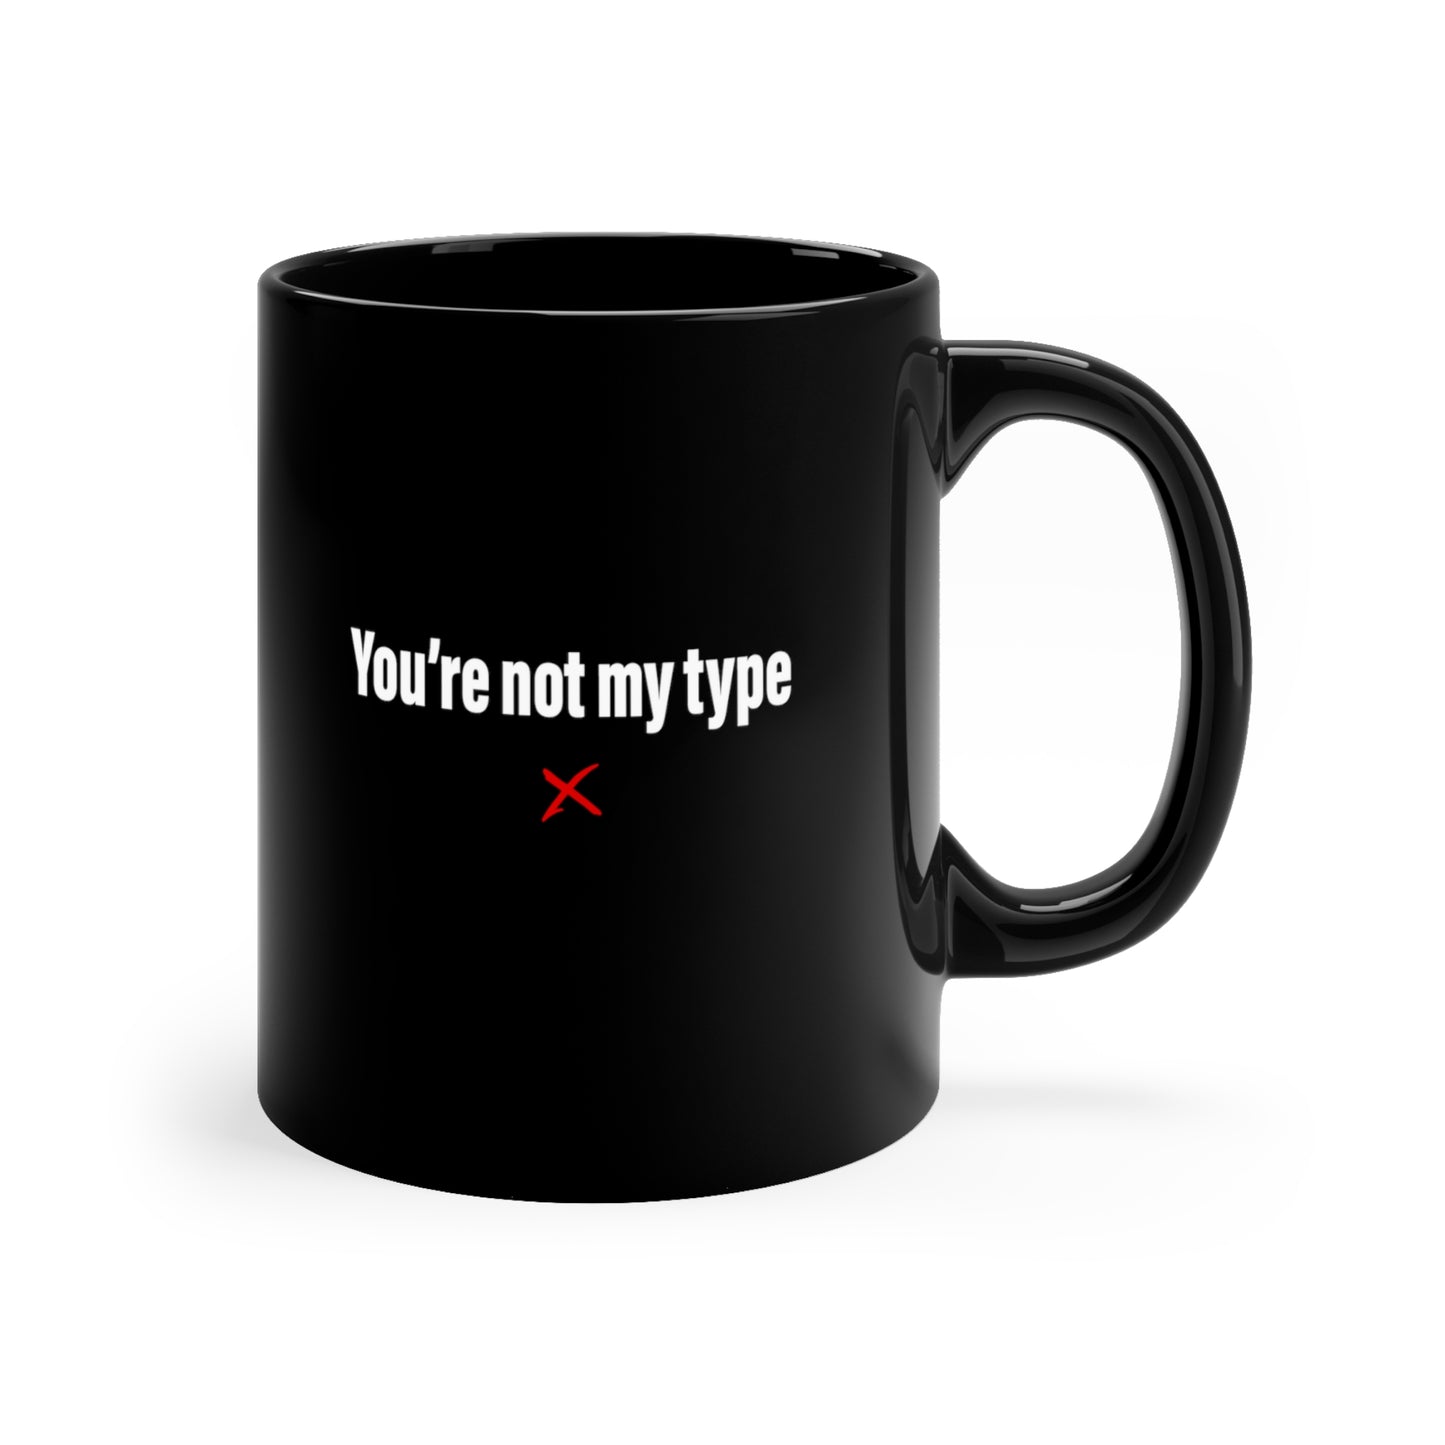 You're not my type - Mug